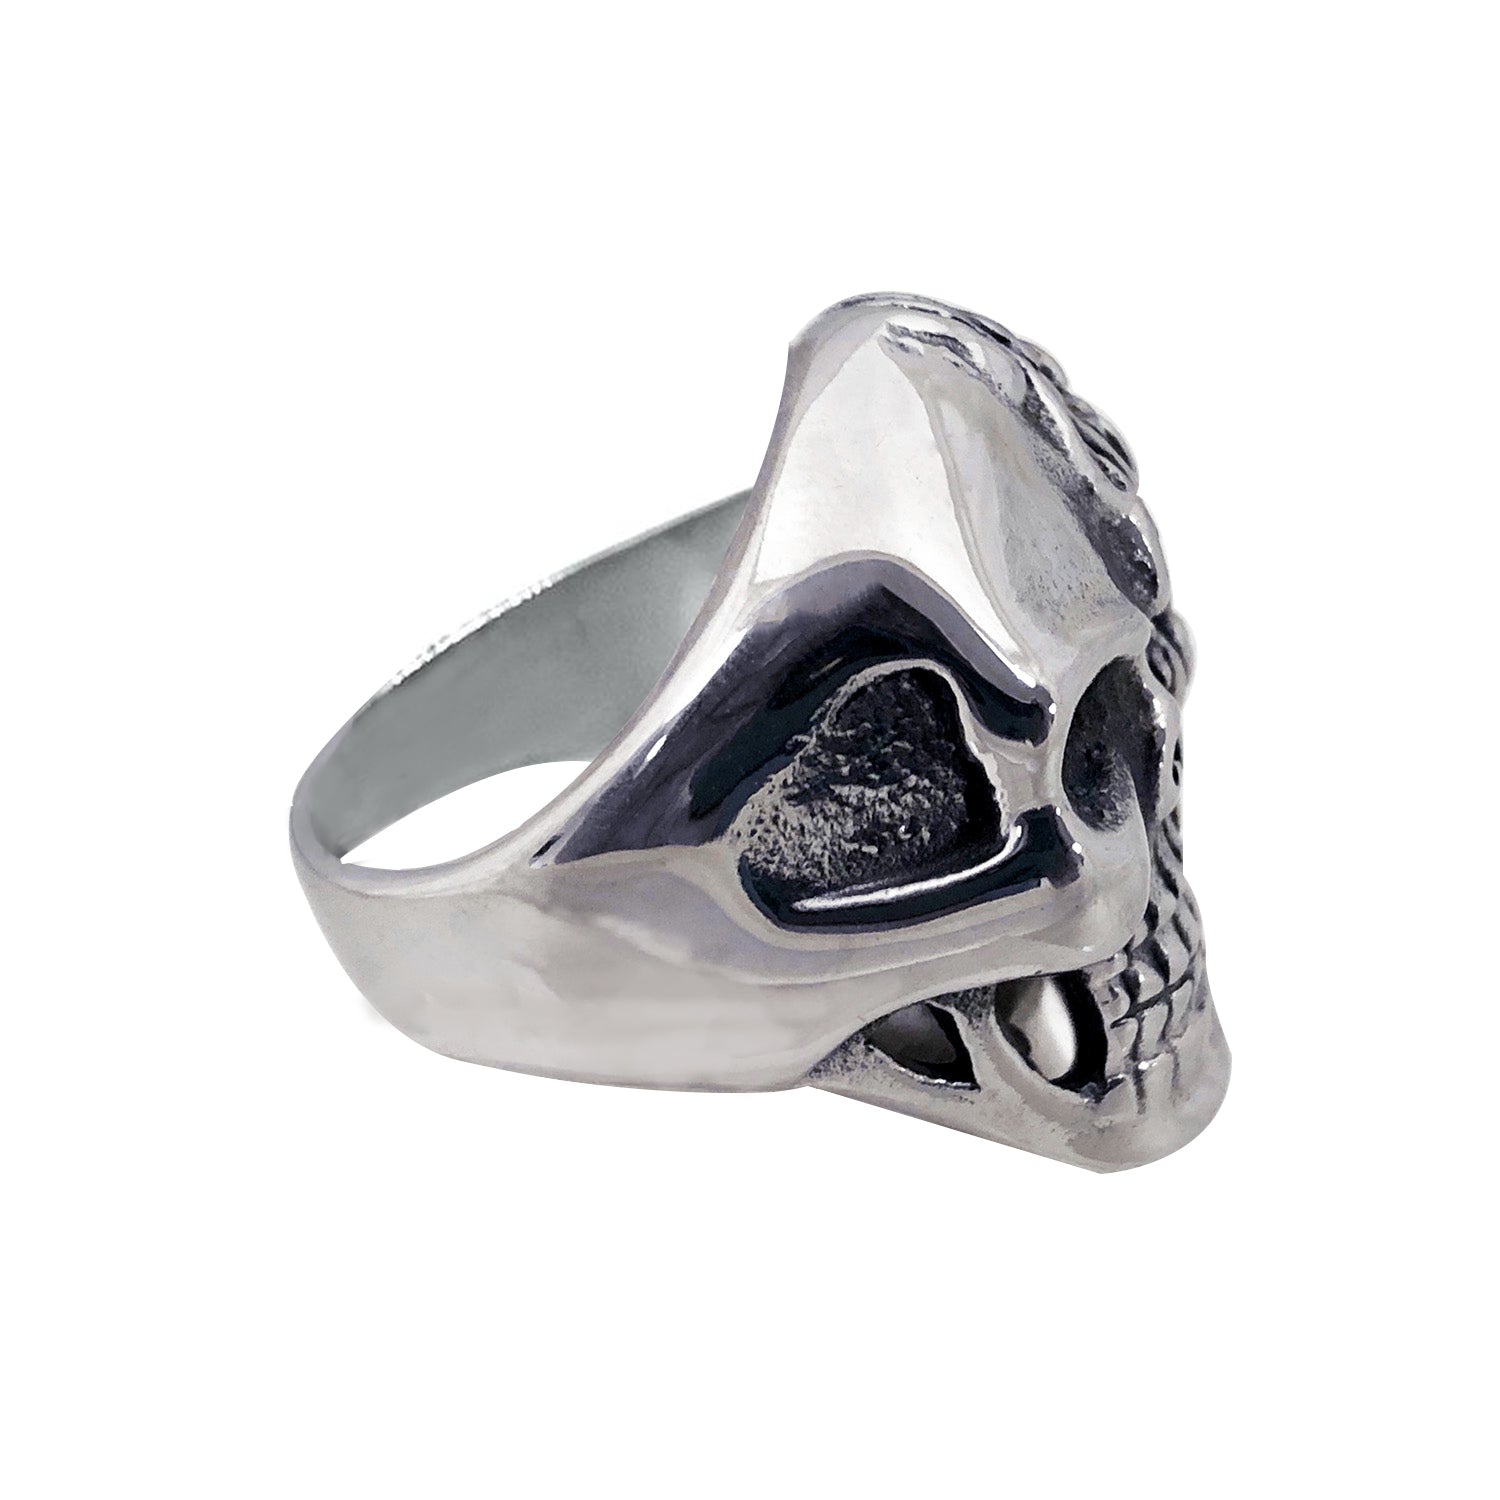 Seven Seas Pirates Flaming Skull Steel Black Enameled Ring (US Size 13 R176)